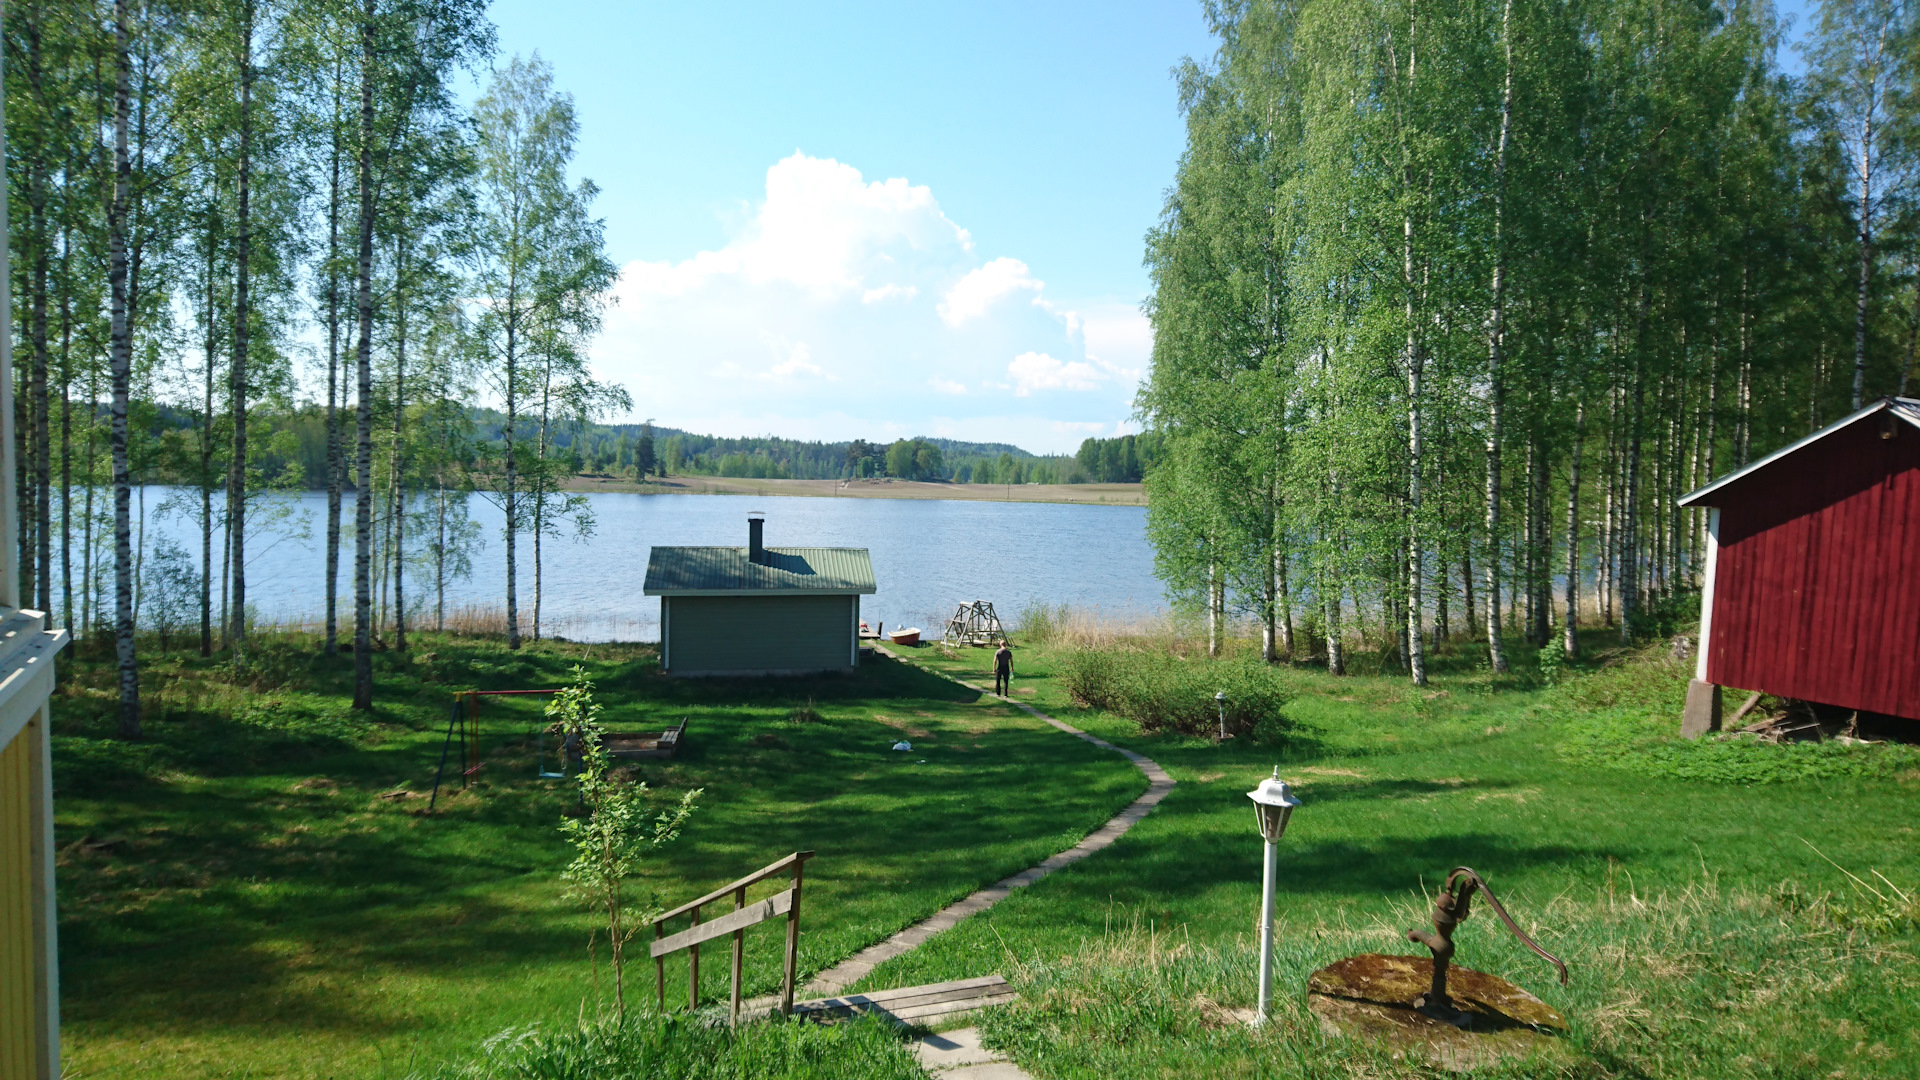 Финское озеро 5. Финское озеро Парголово. Озеро Симпеле Финляндия. Финское озеро Парголово пляж. Финское озеро Парголово рыбалка.